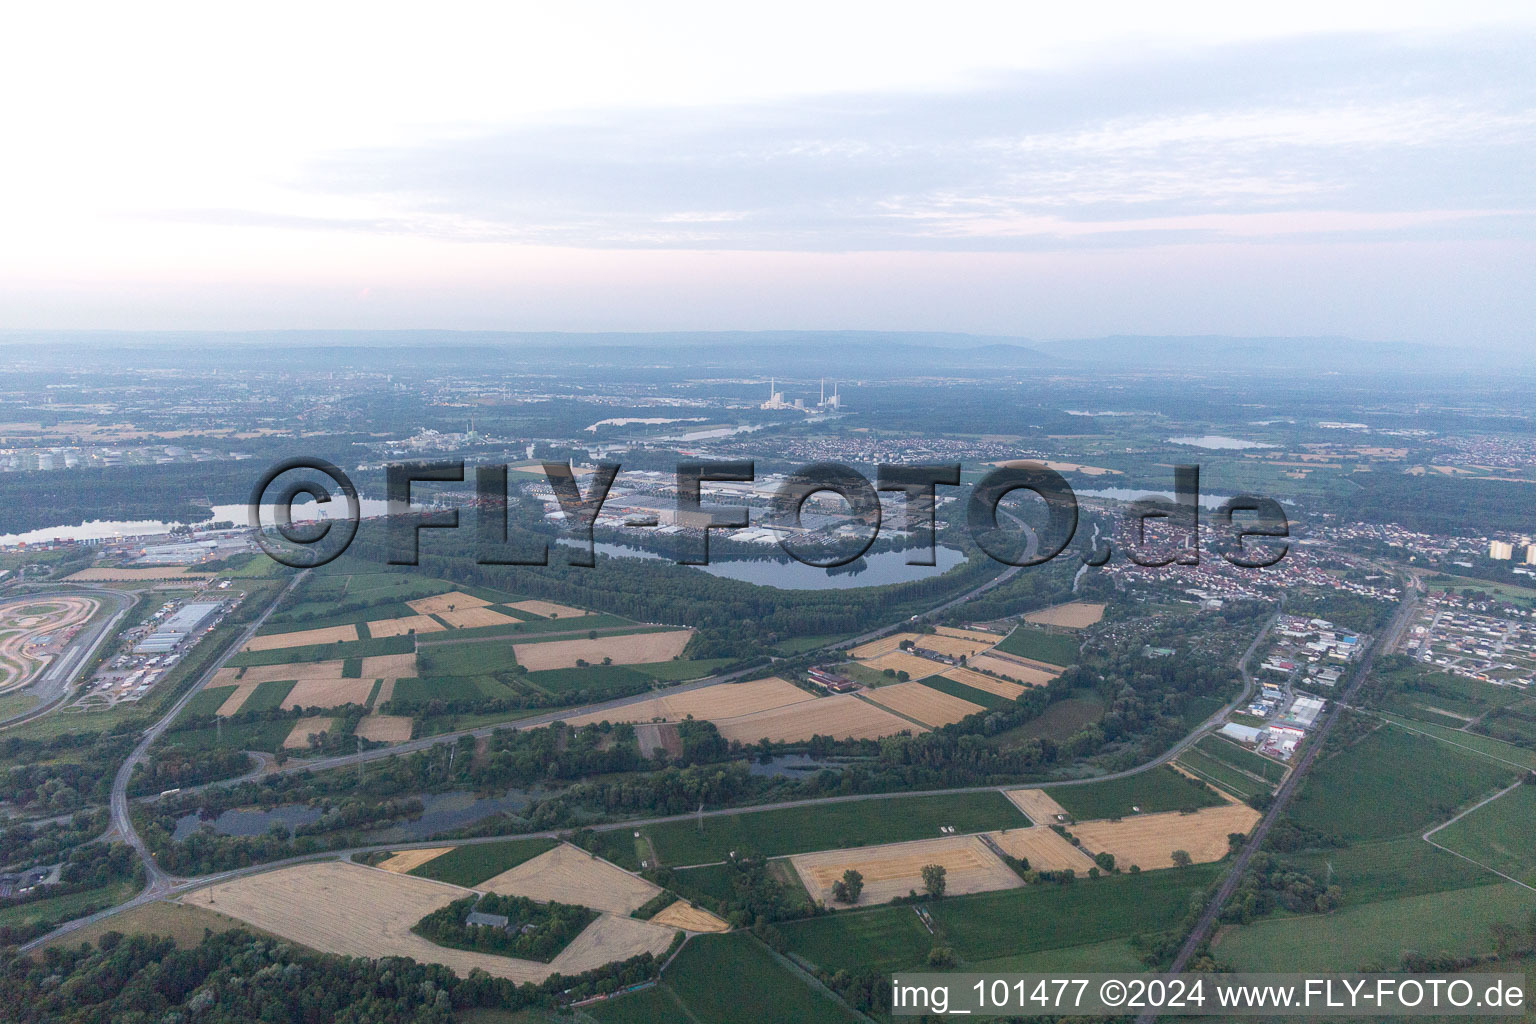 Drone recording of Wörth am Rhein in the state Rhineland-Palatinate, Germany